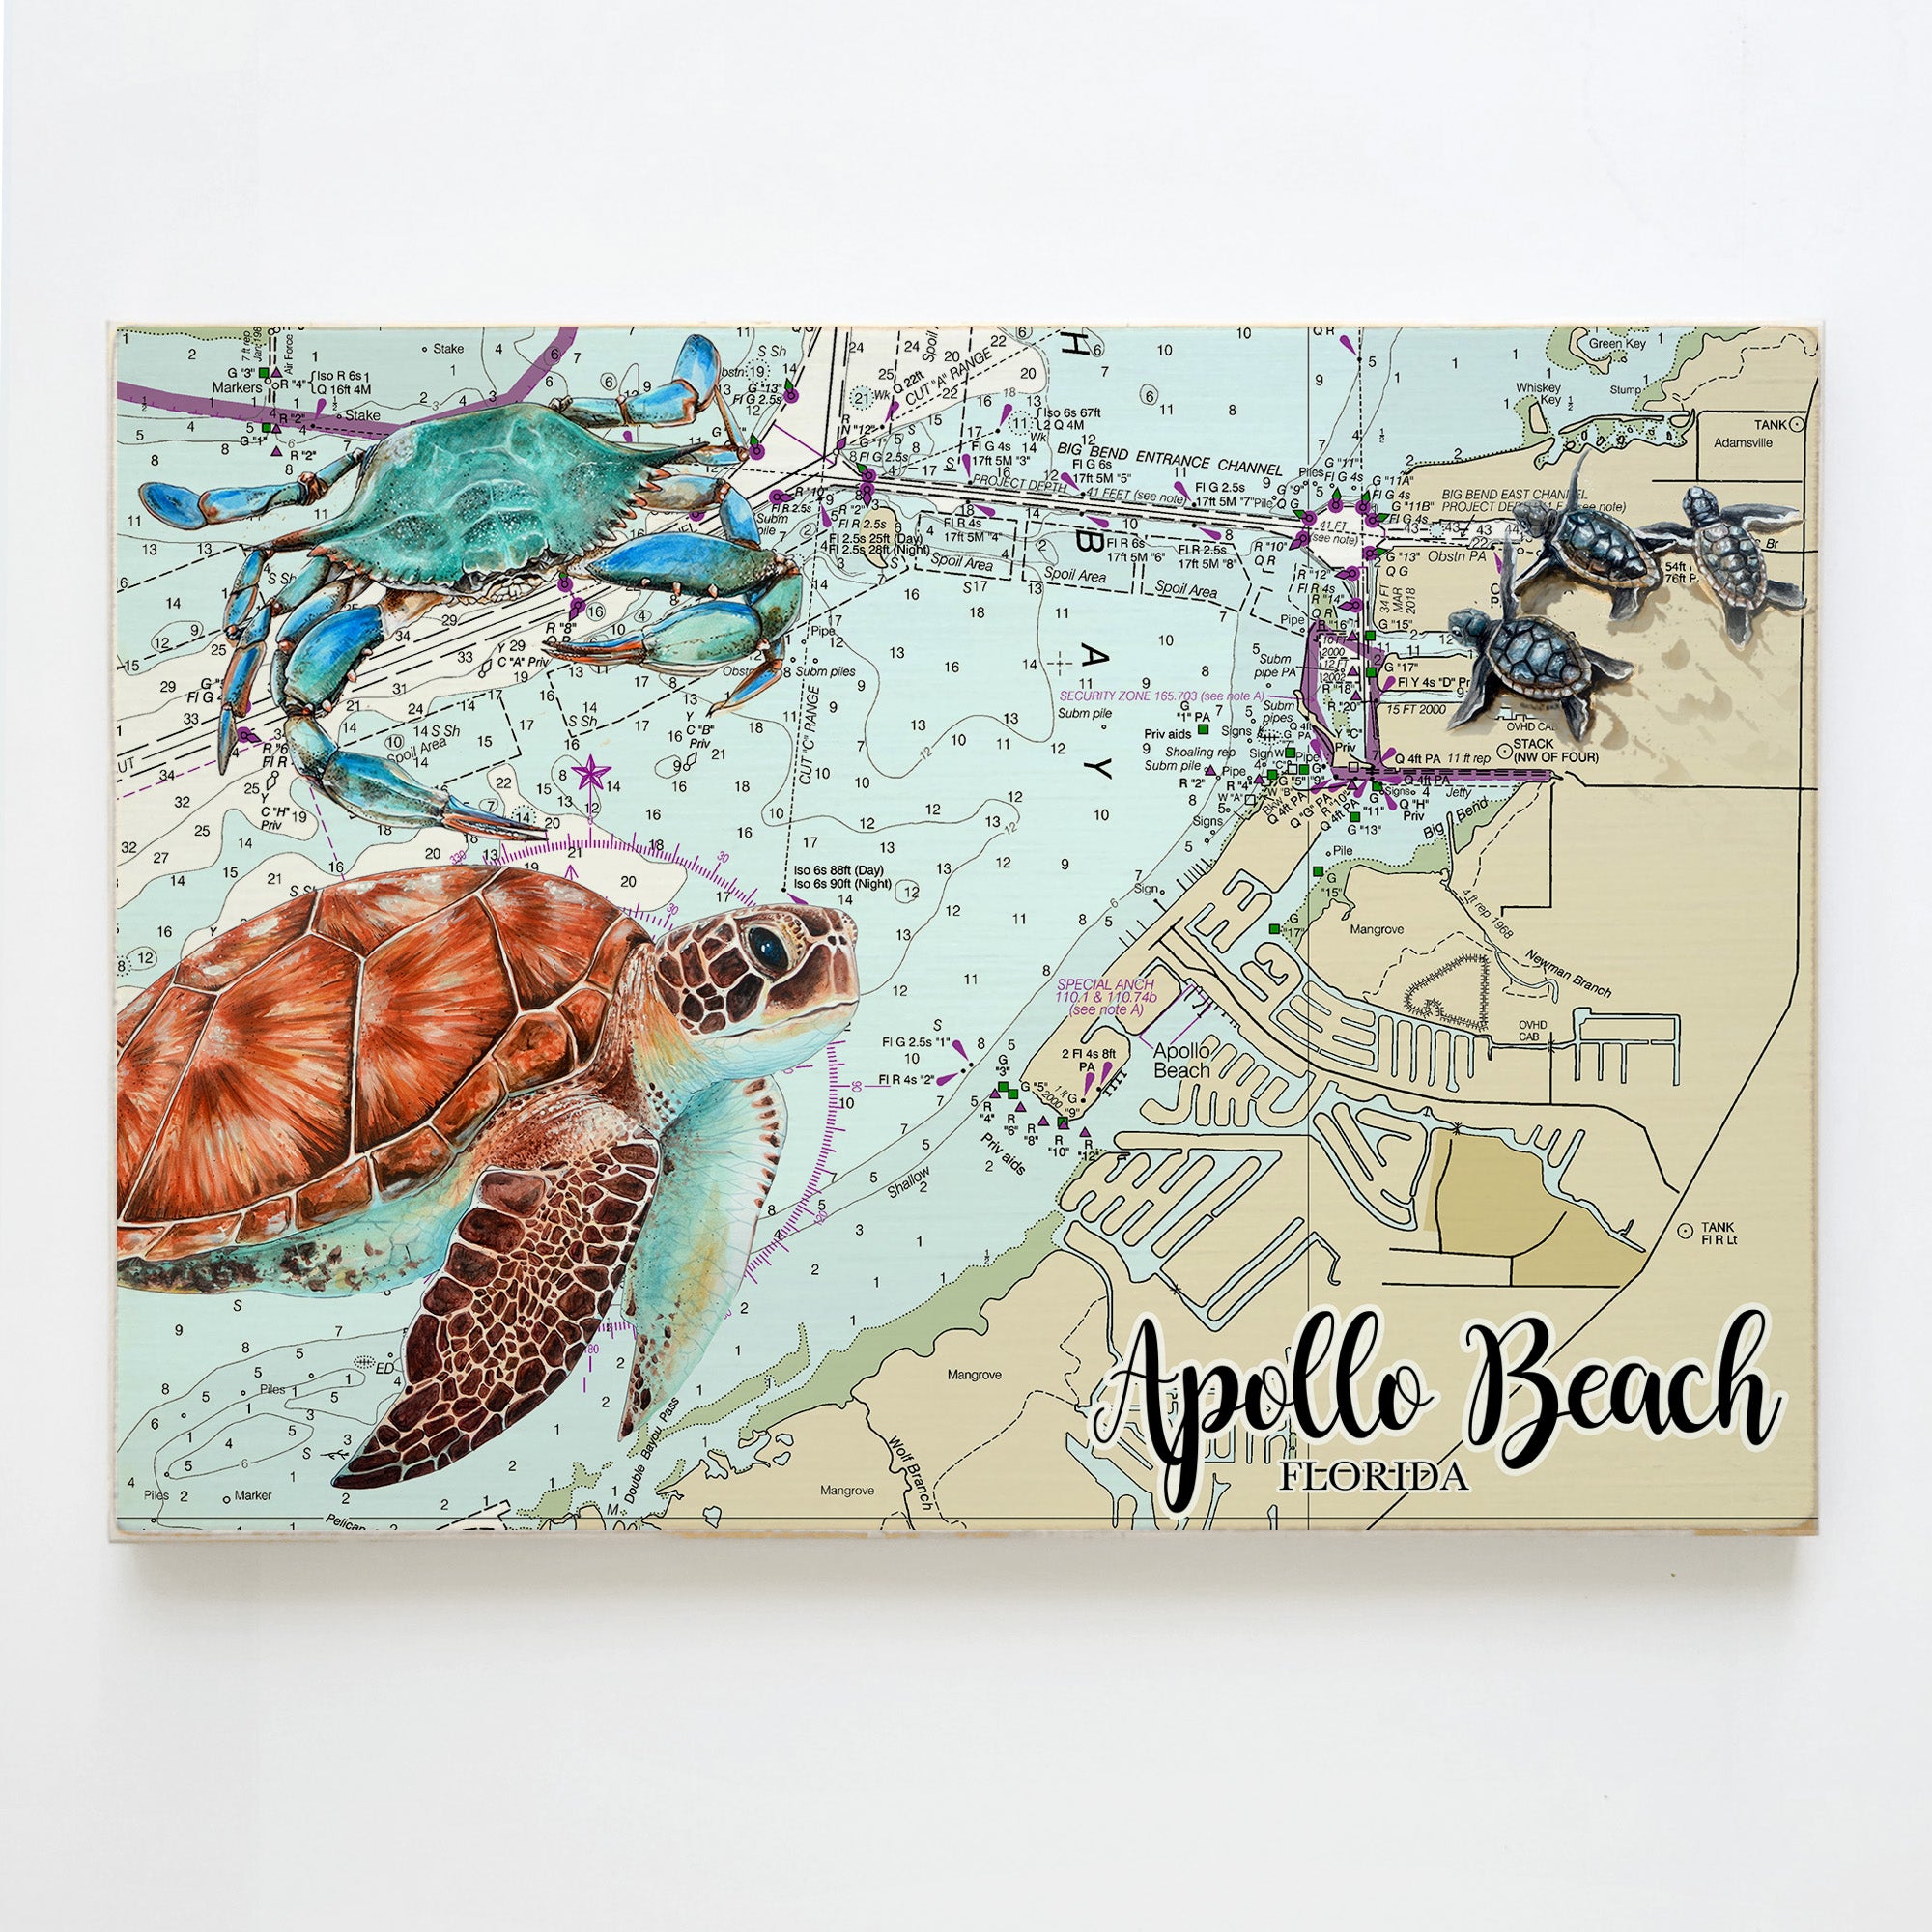 Apollo Beach, FL   Sea Turtles Blue Crab Plank Map